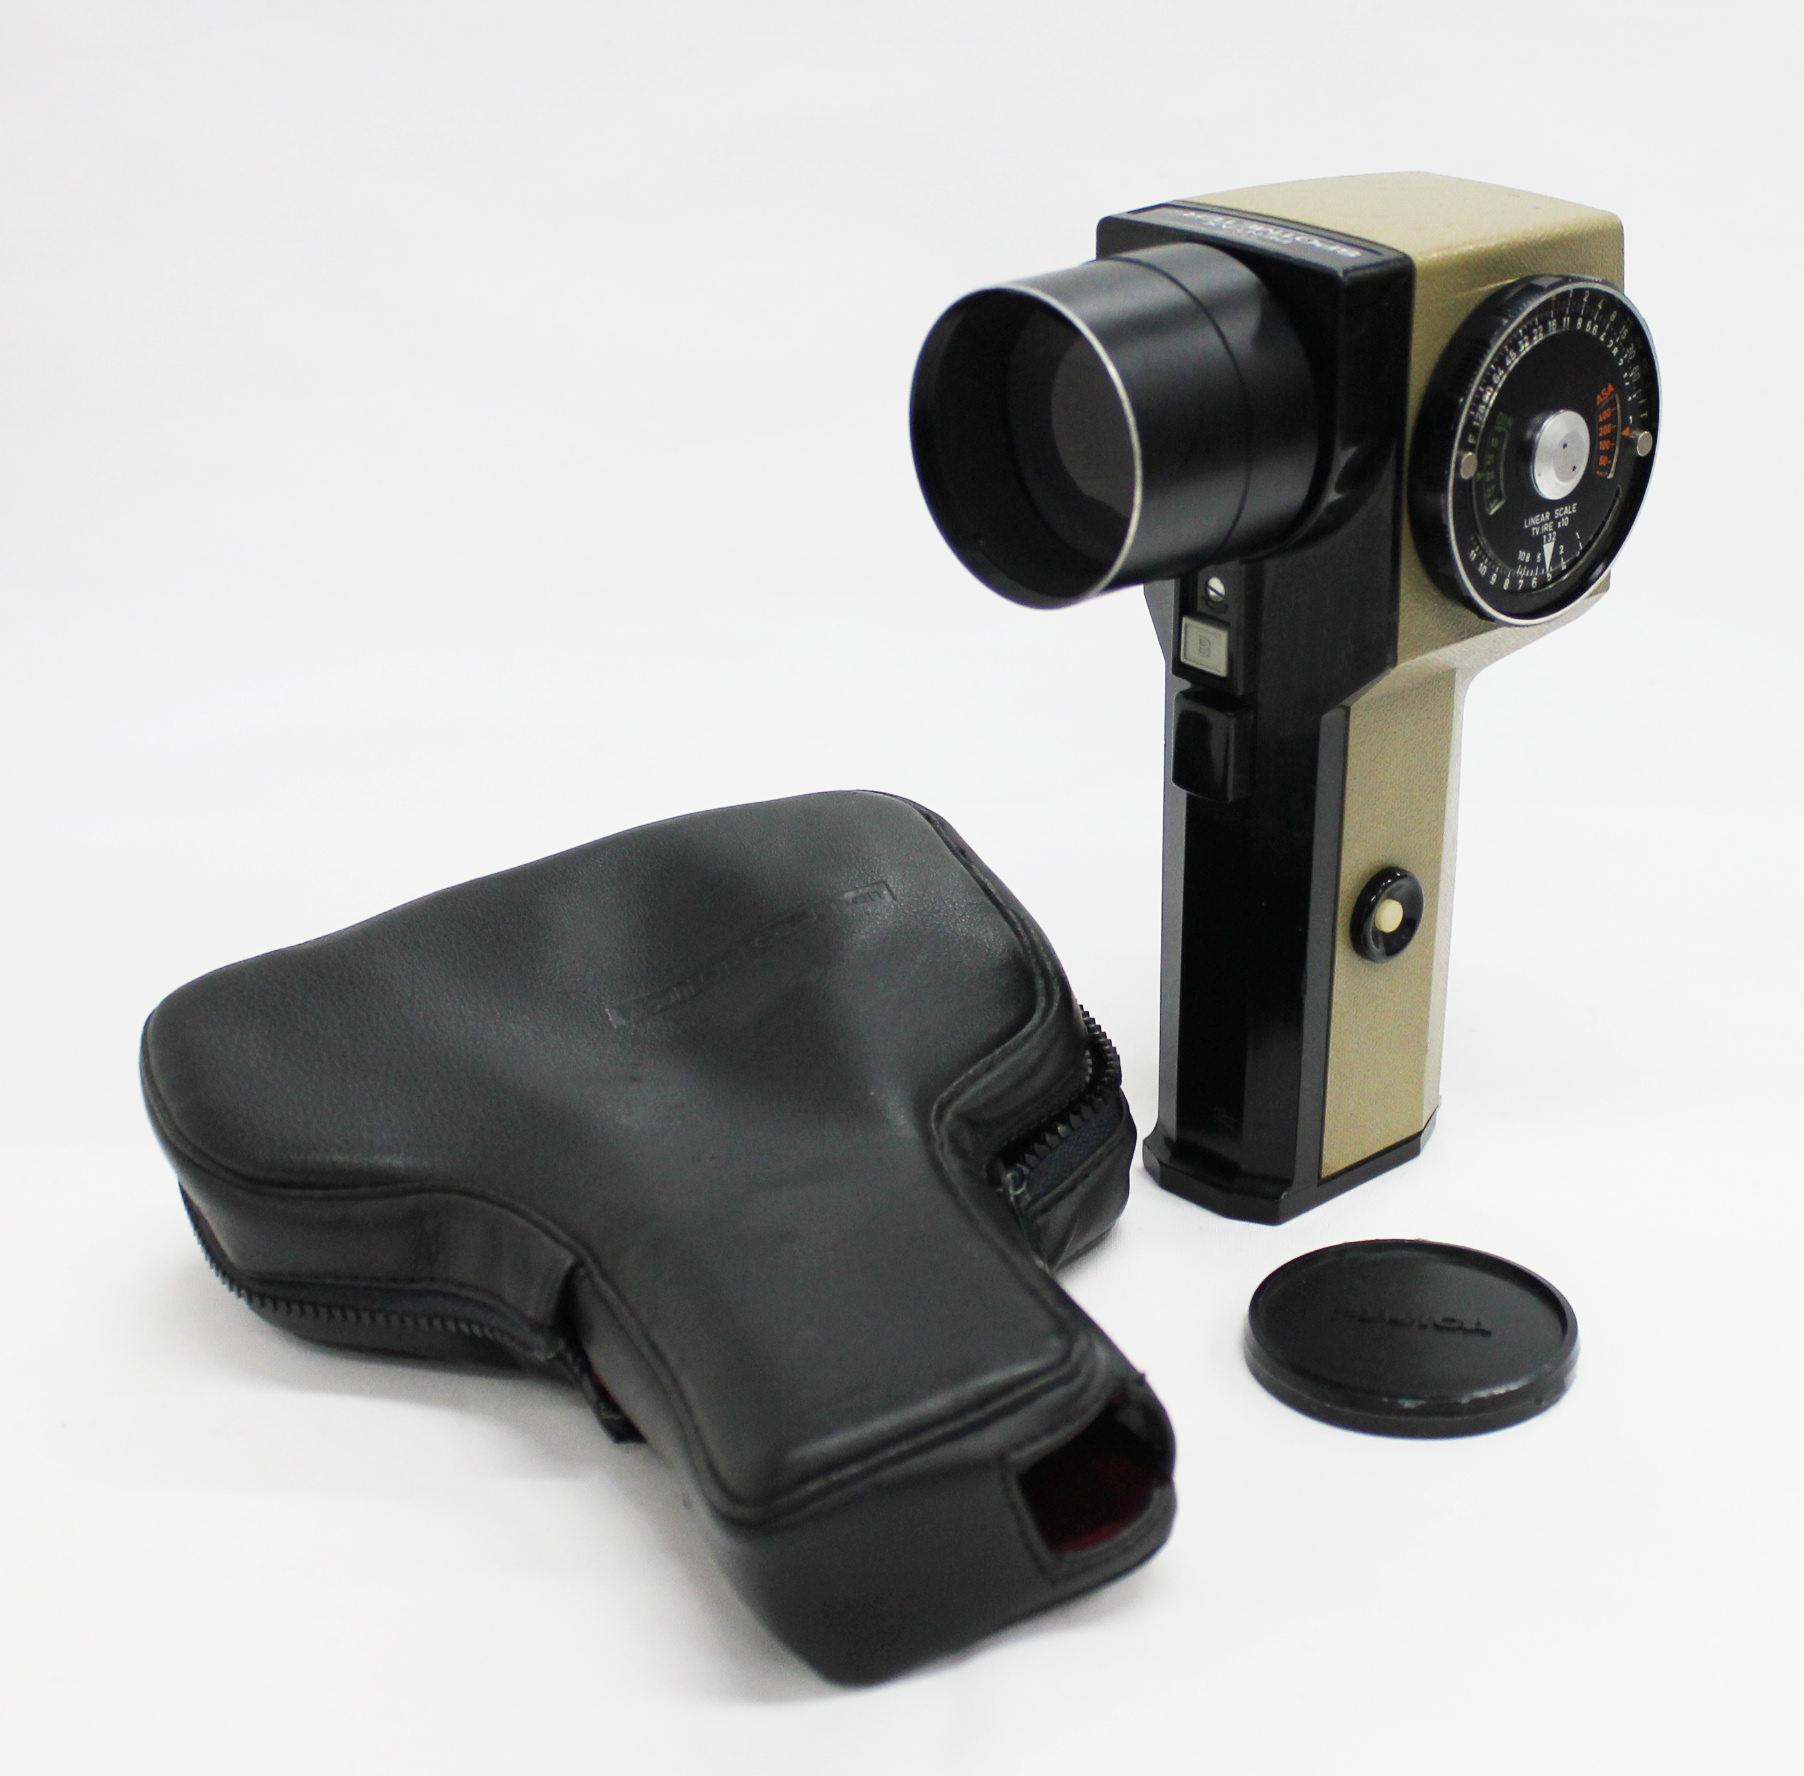 Japan Used Camera Shop | [Excellent++++] Asahi Pentax Spotmeter V Light Meter with Case from Japan